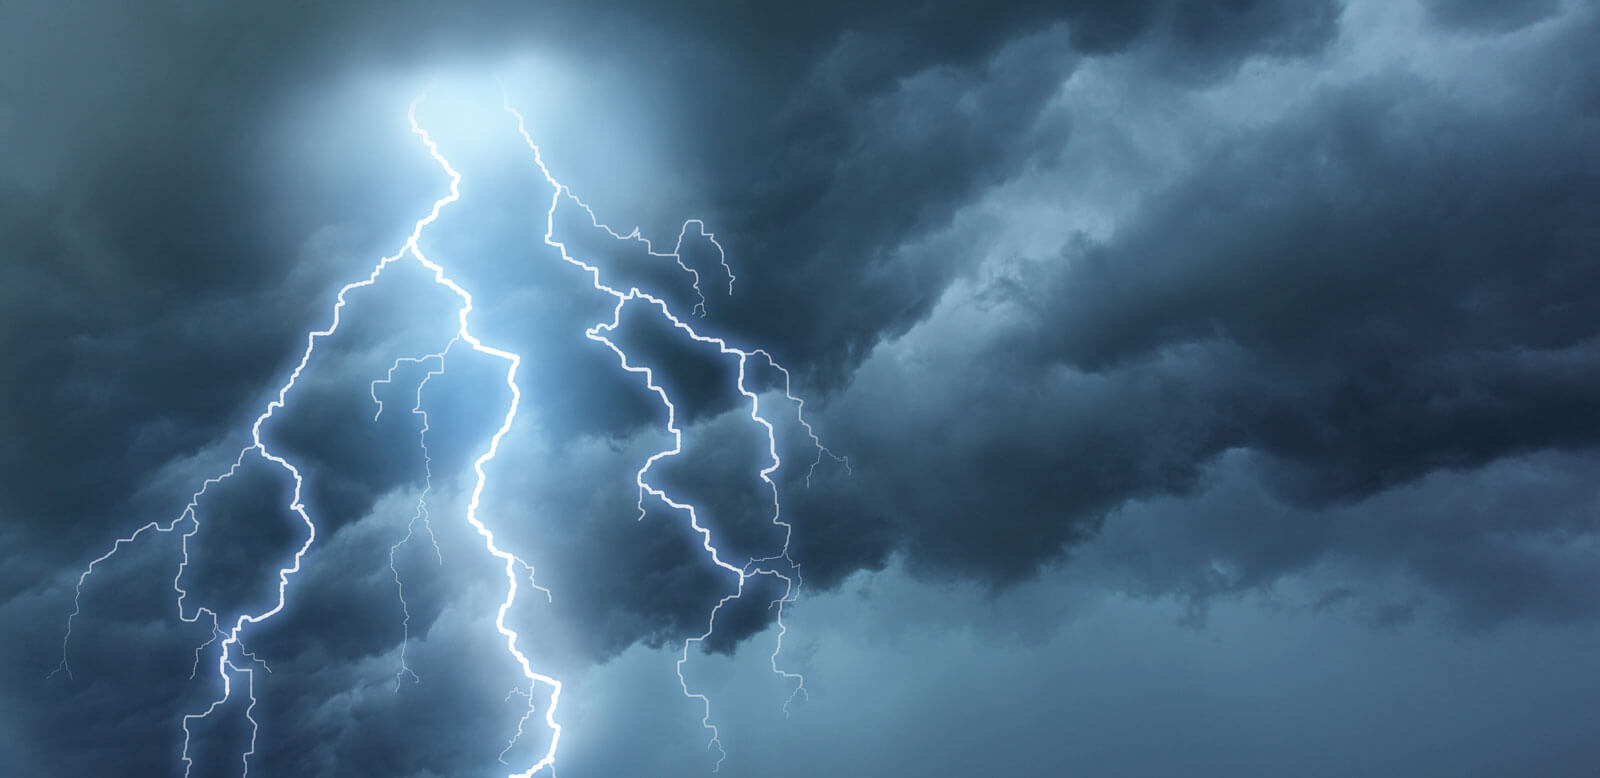 How to make a claim for lightning damage - SageSure